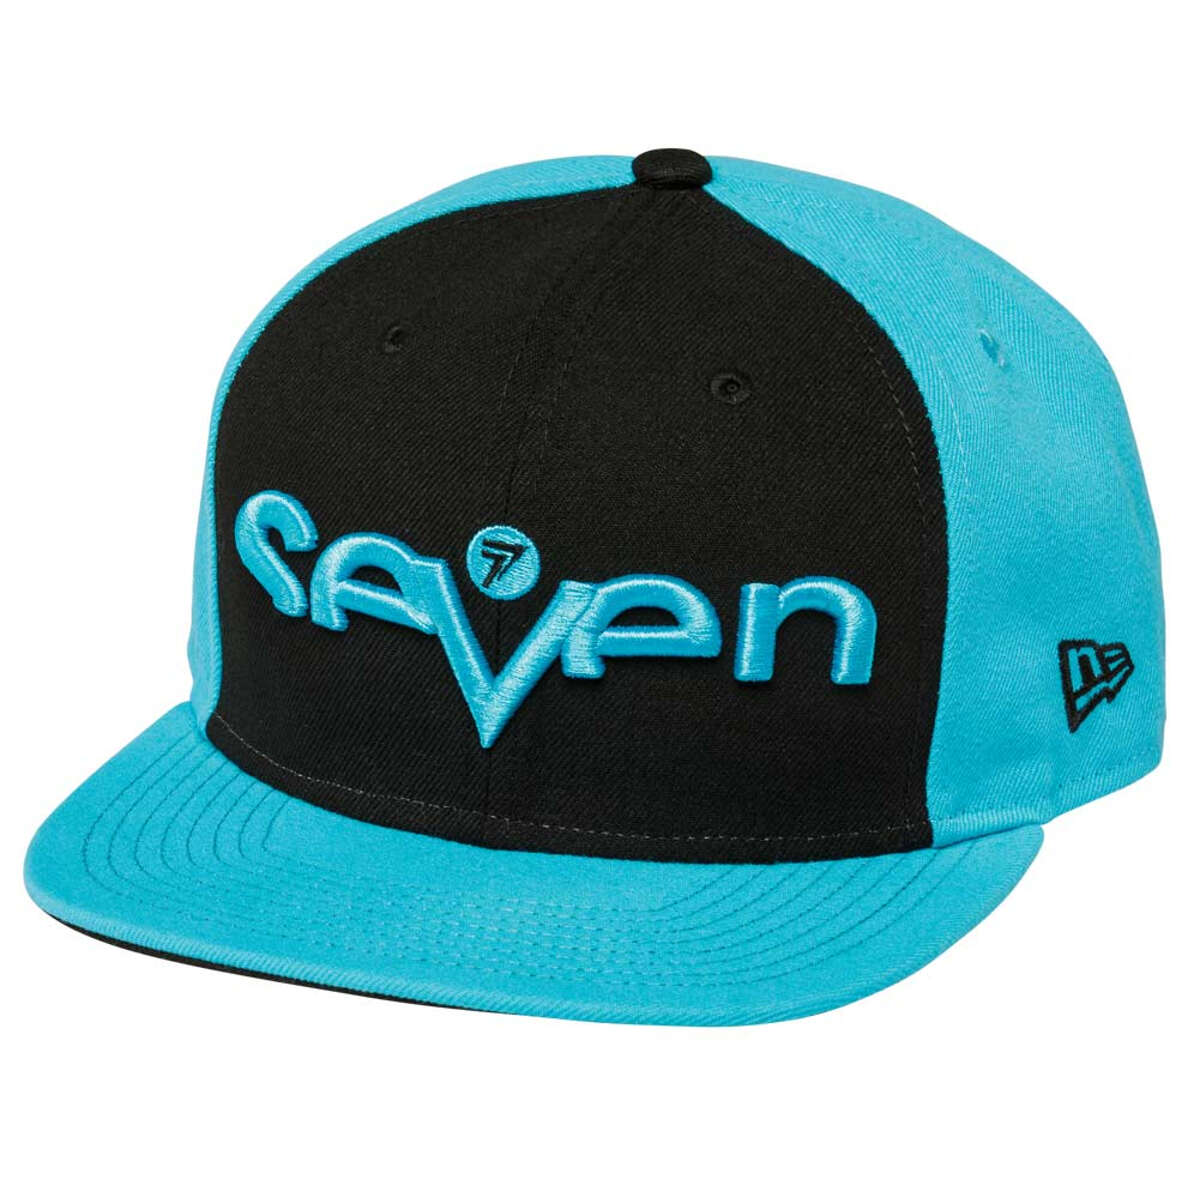 Seven MX Kids Snapback Cap Youth Brand Black/Light Blue